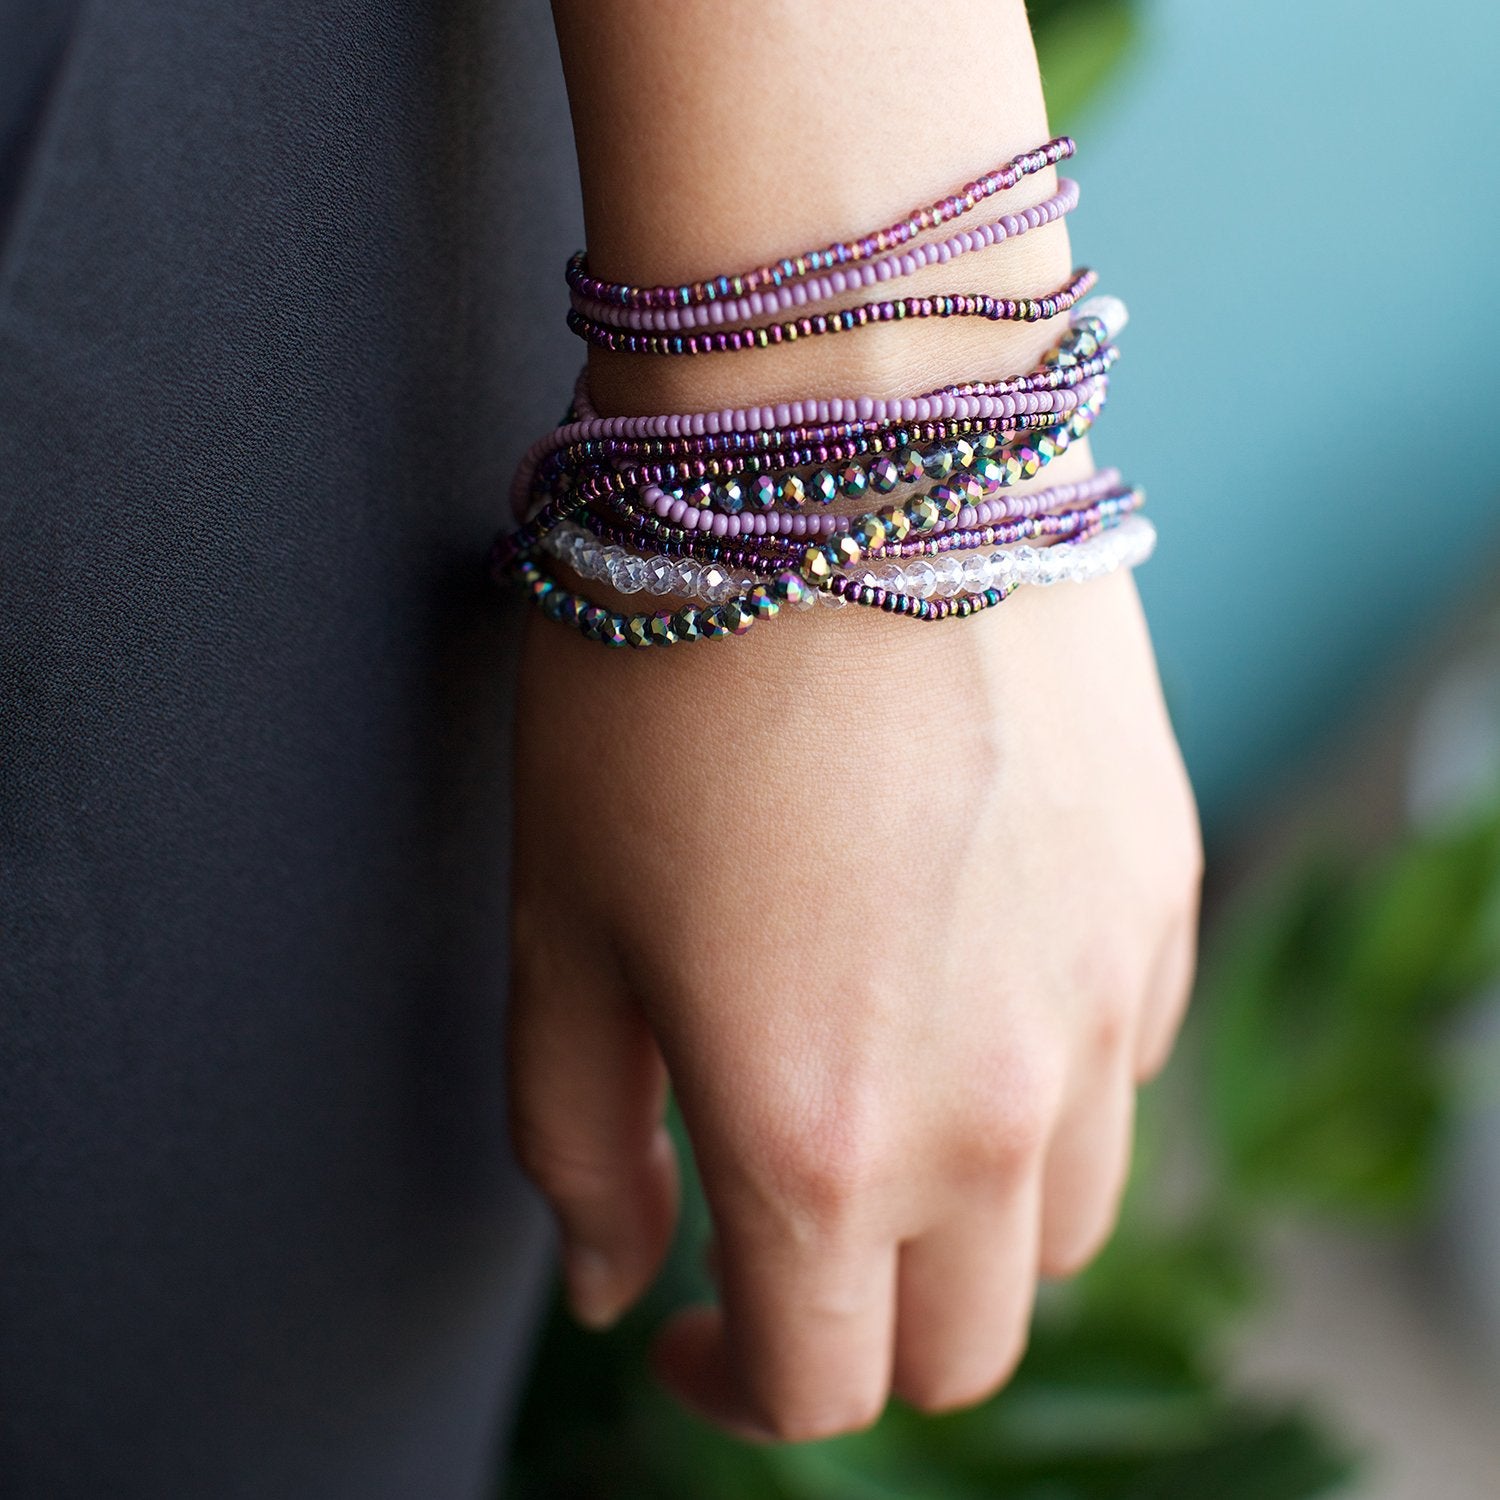 Lucia's World Emporium Fair Trade Handmade Guatemalan Beaded Crystal Wrap Necklace/Bracelet in Violet